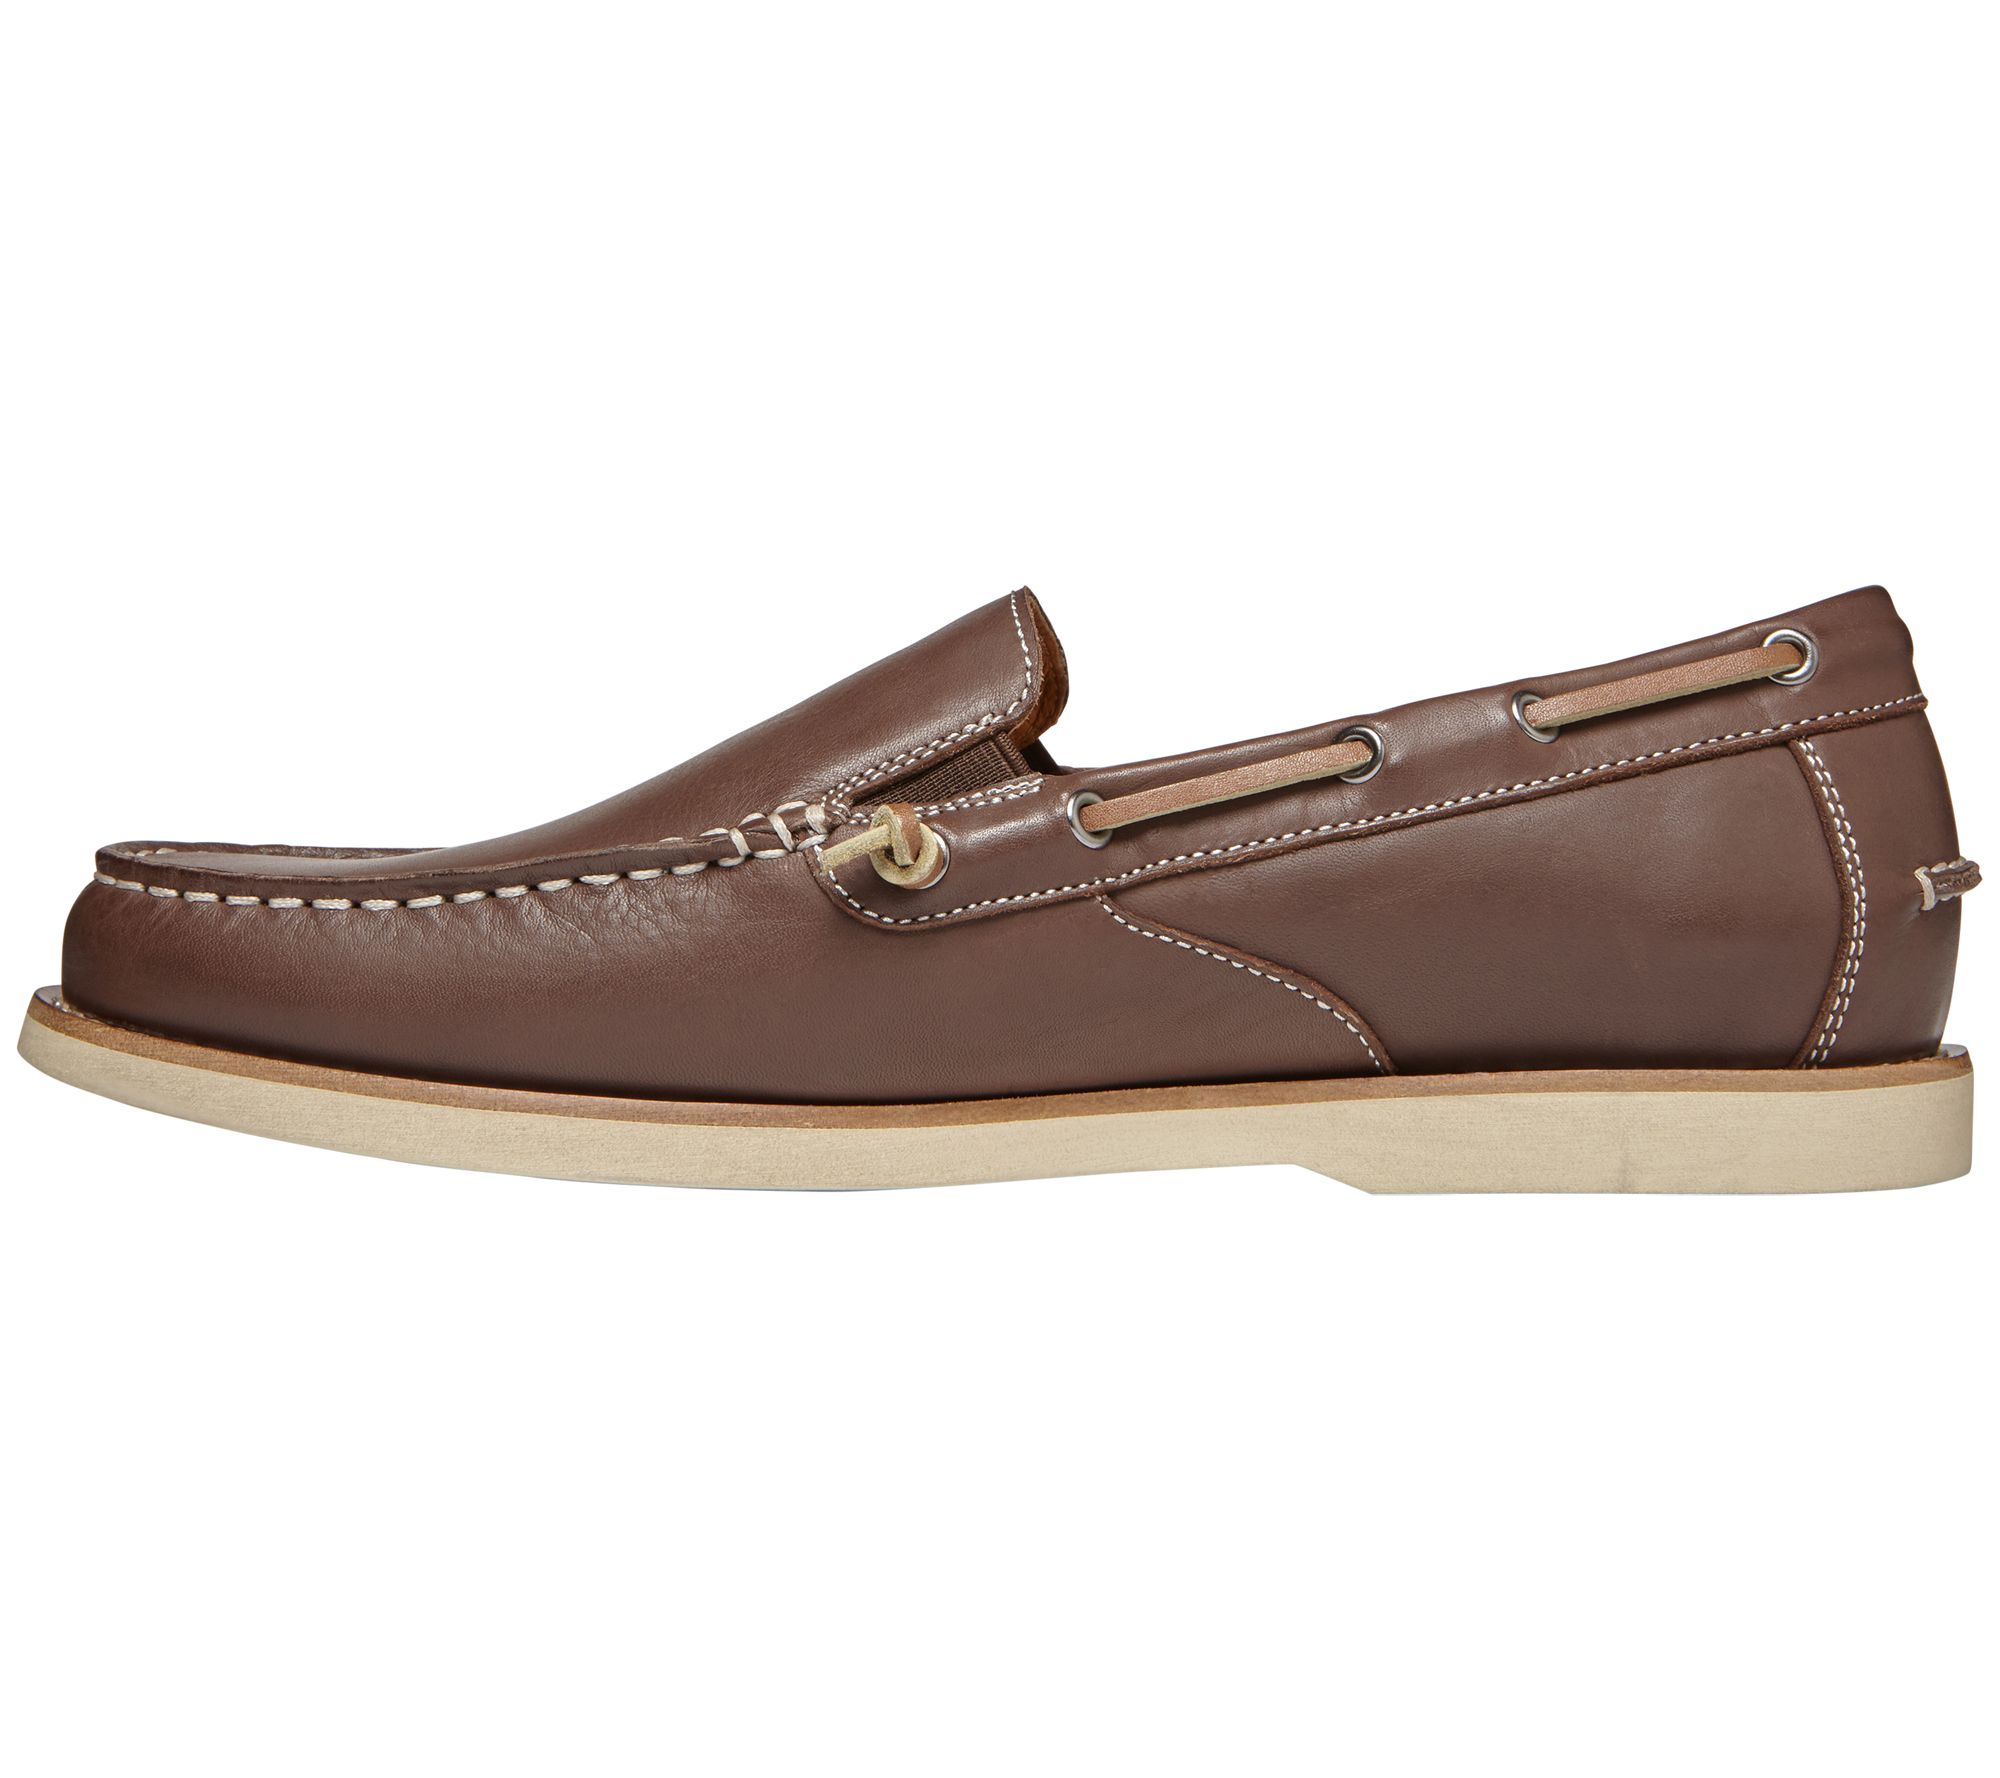 Vionic Men's Slip-On Leather Boat Shoes - Greyson - QVC.com